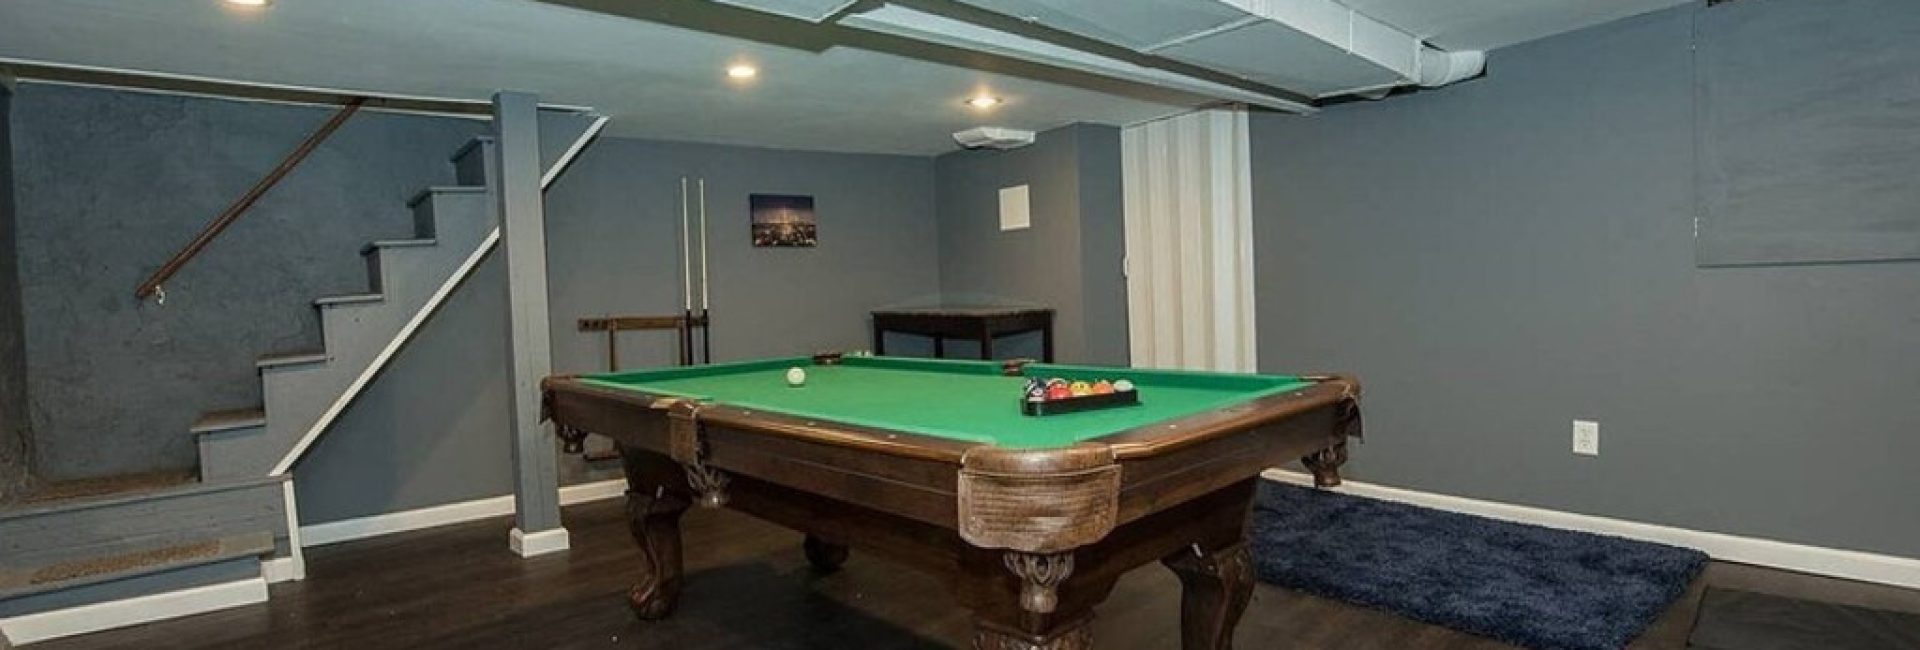 Pool Table Room – Queen Village